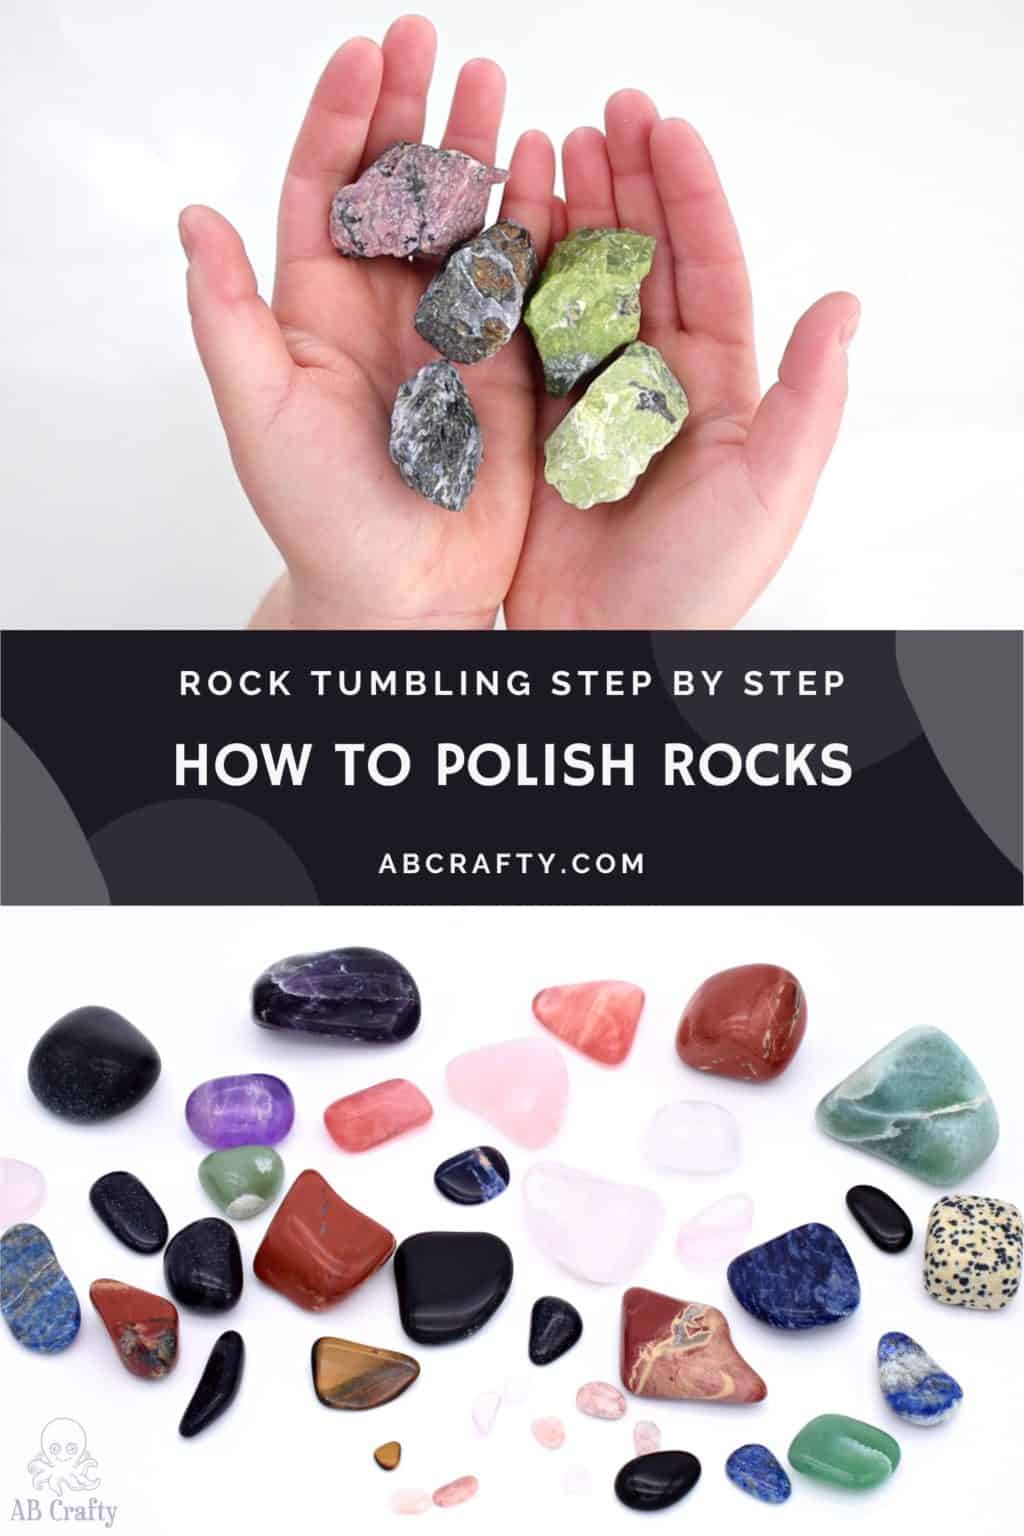 Question about polish : r/RockTumbling